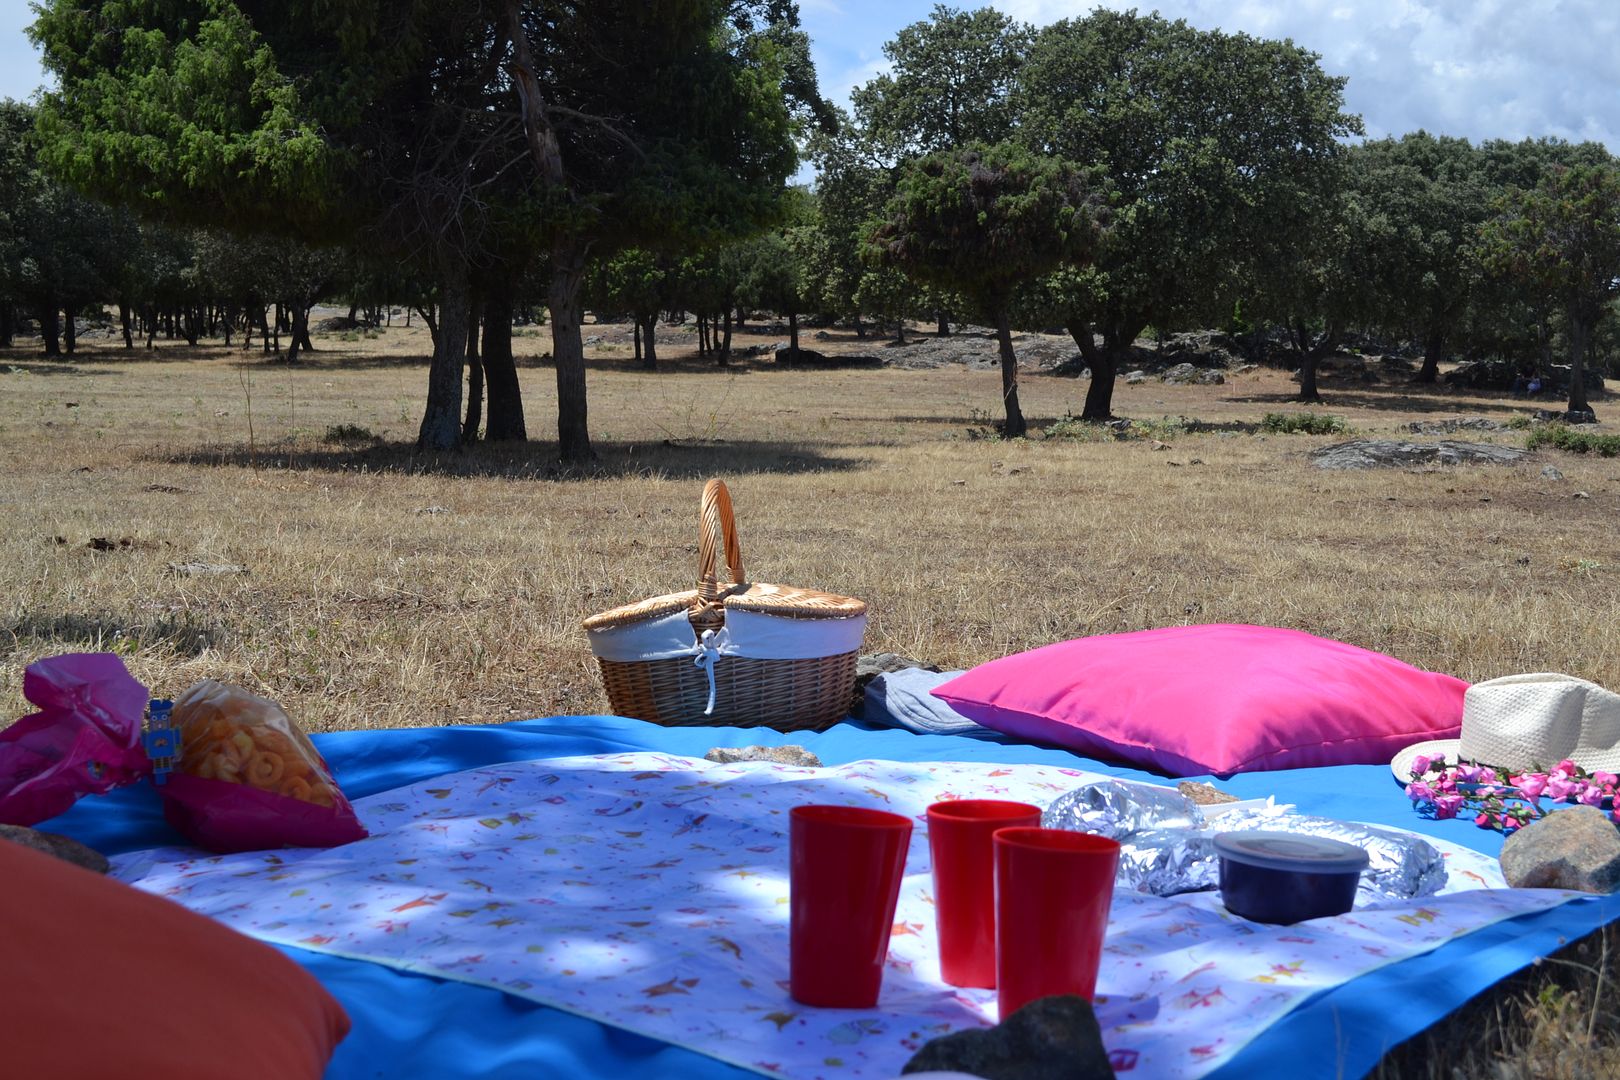  photo picnic-en-familia-campo-dehesa-mantel-cesta-cojines7_zpsc4fa0a29.jpg